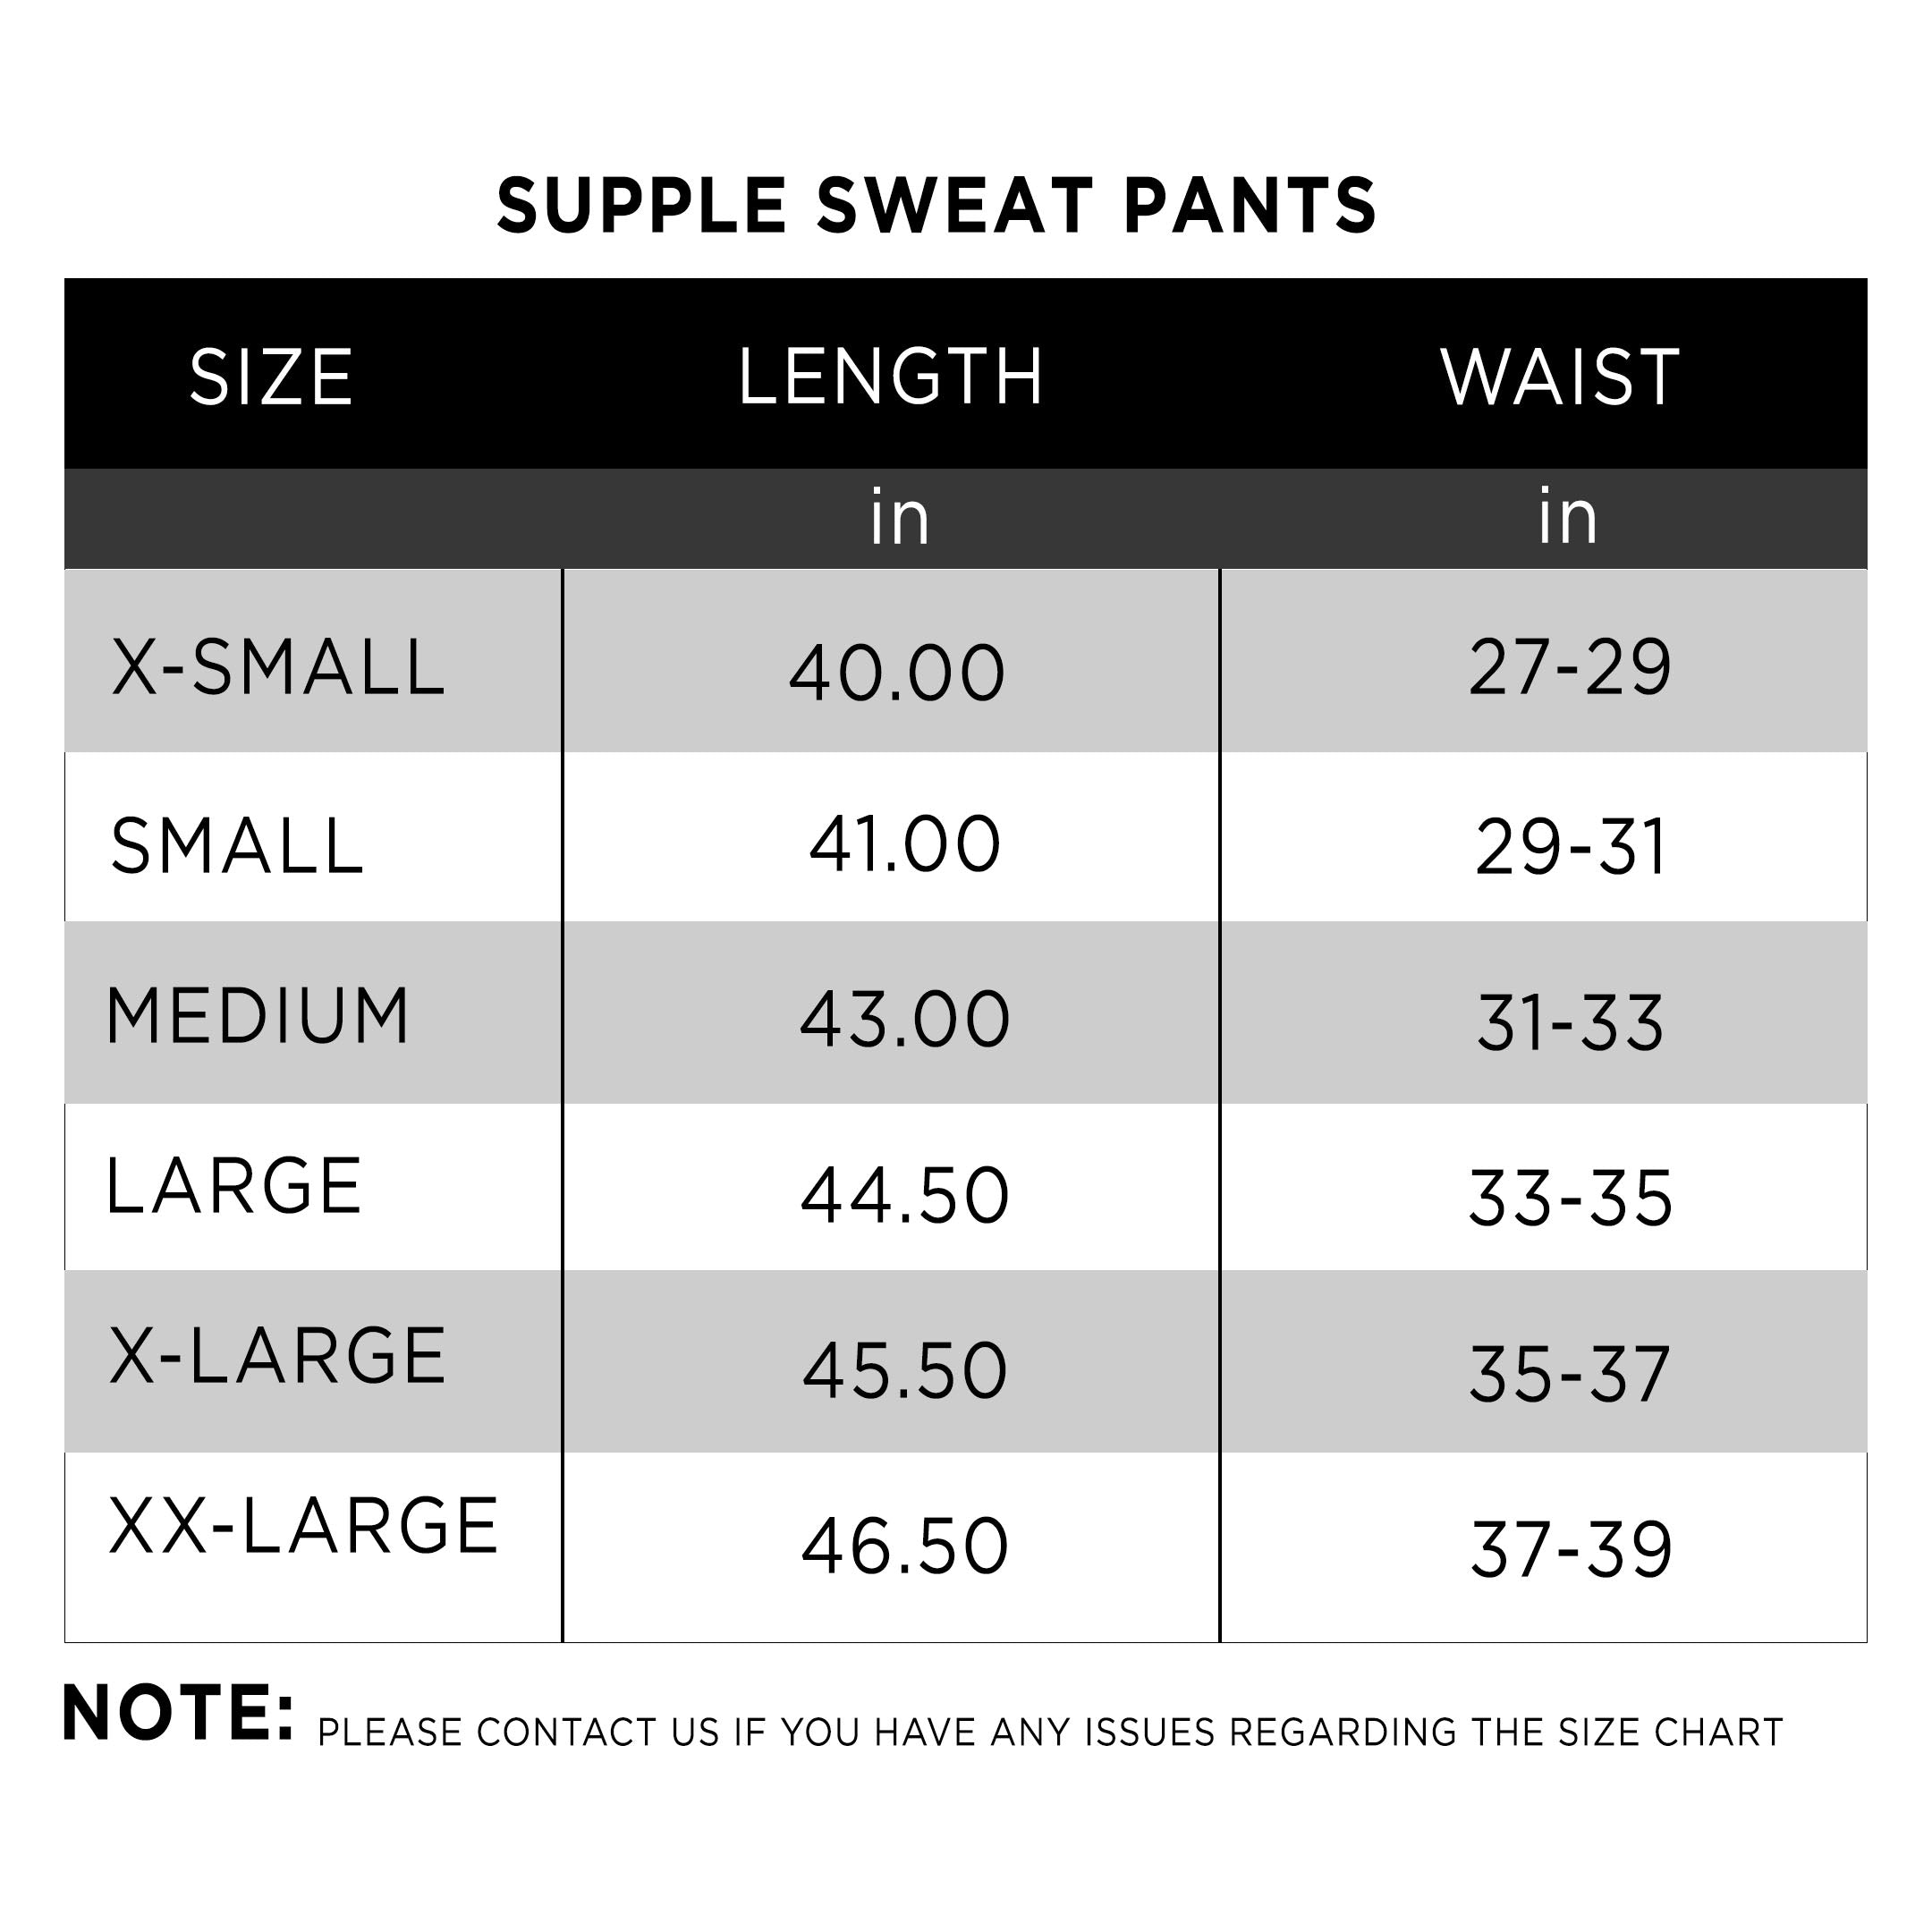 Supple Sweat Pants